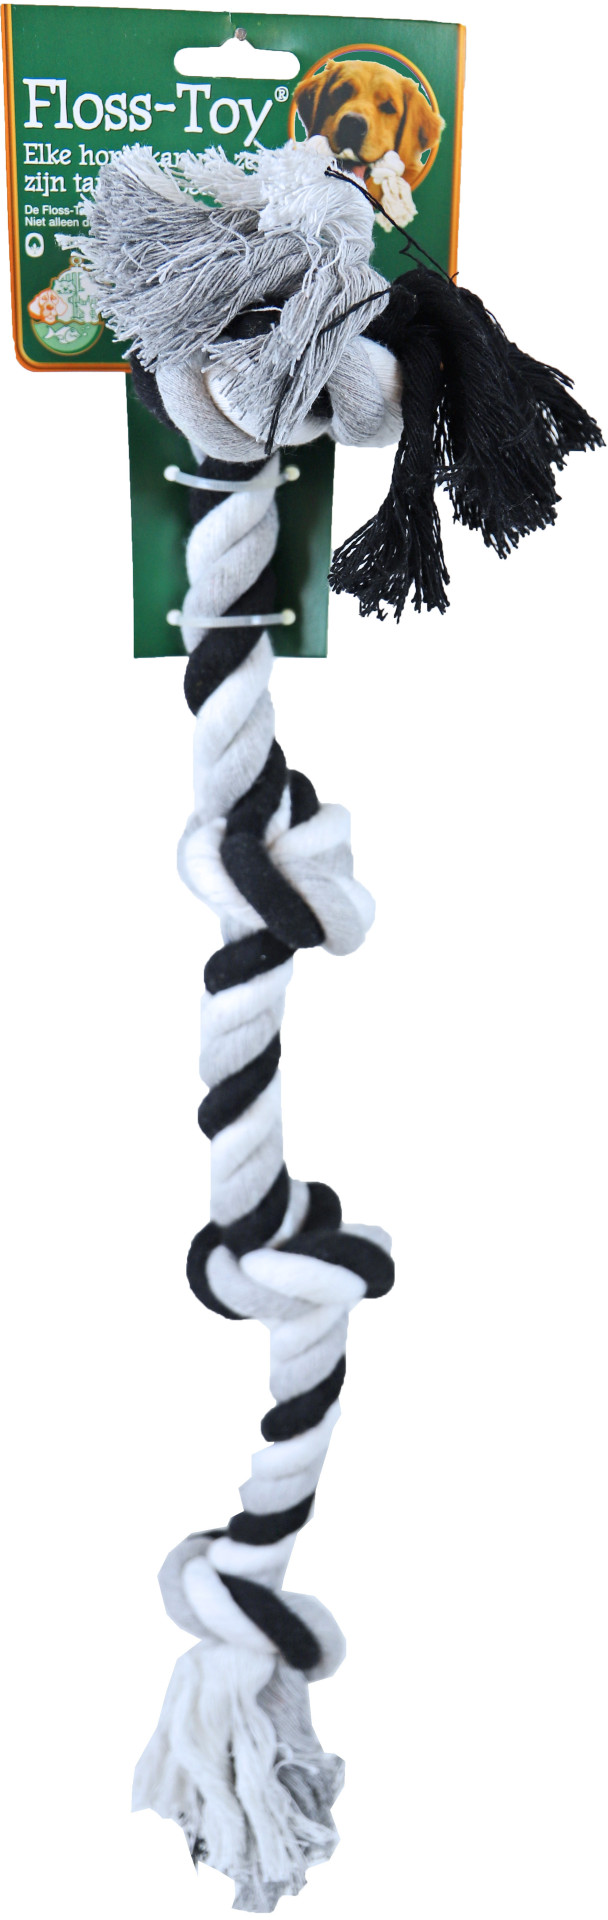 Floss-Toy 4-knoop zwart/wit